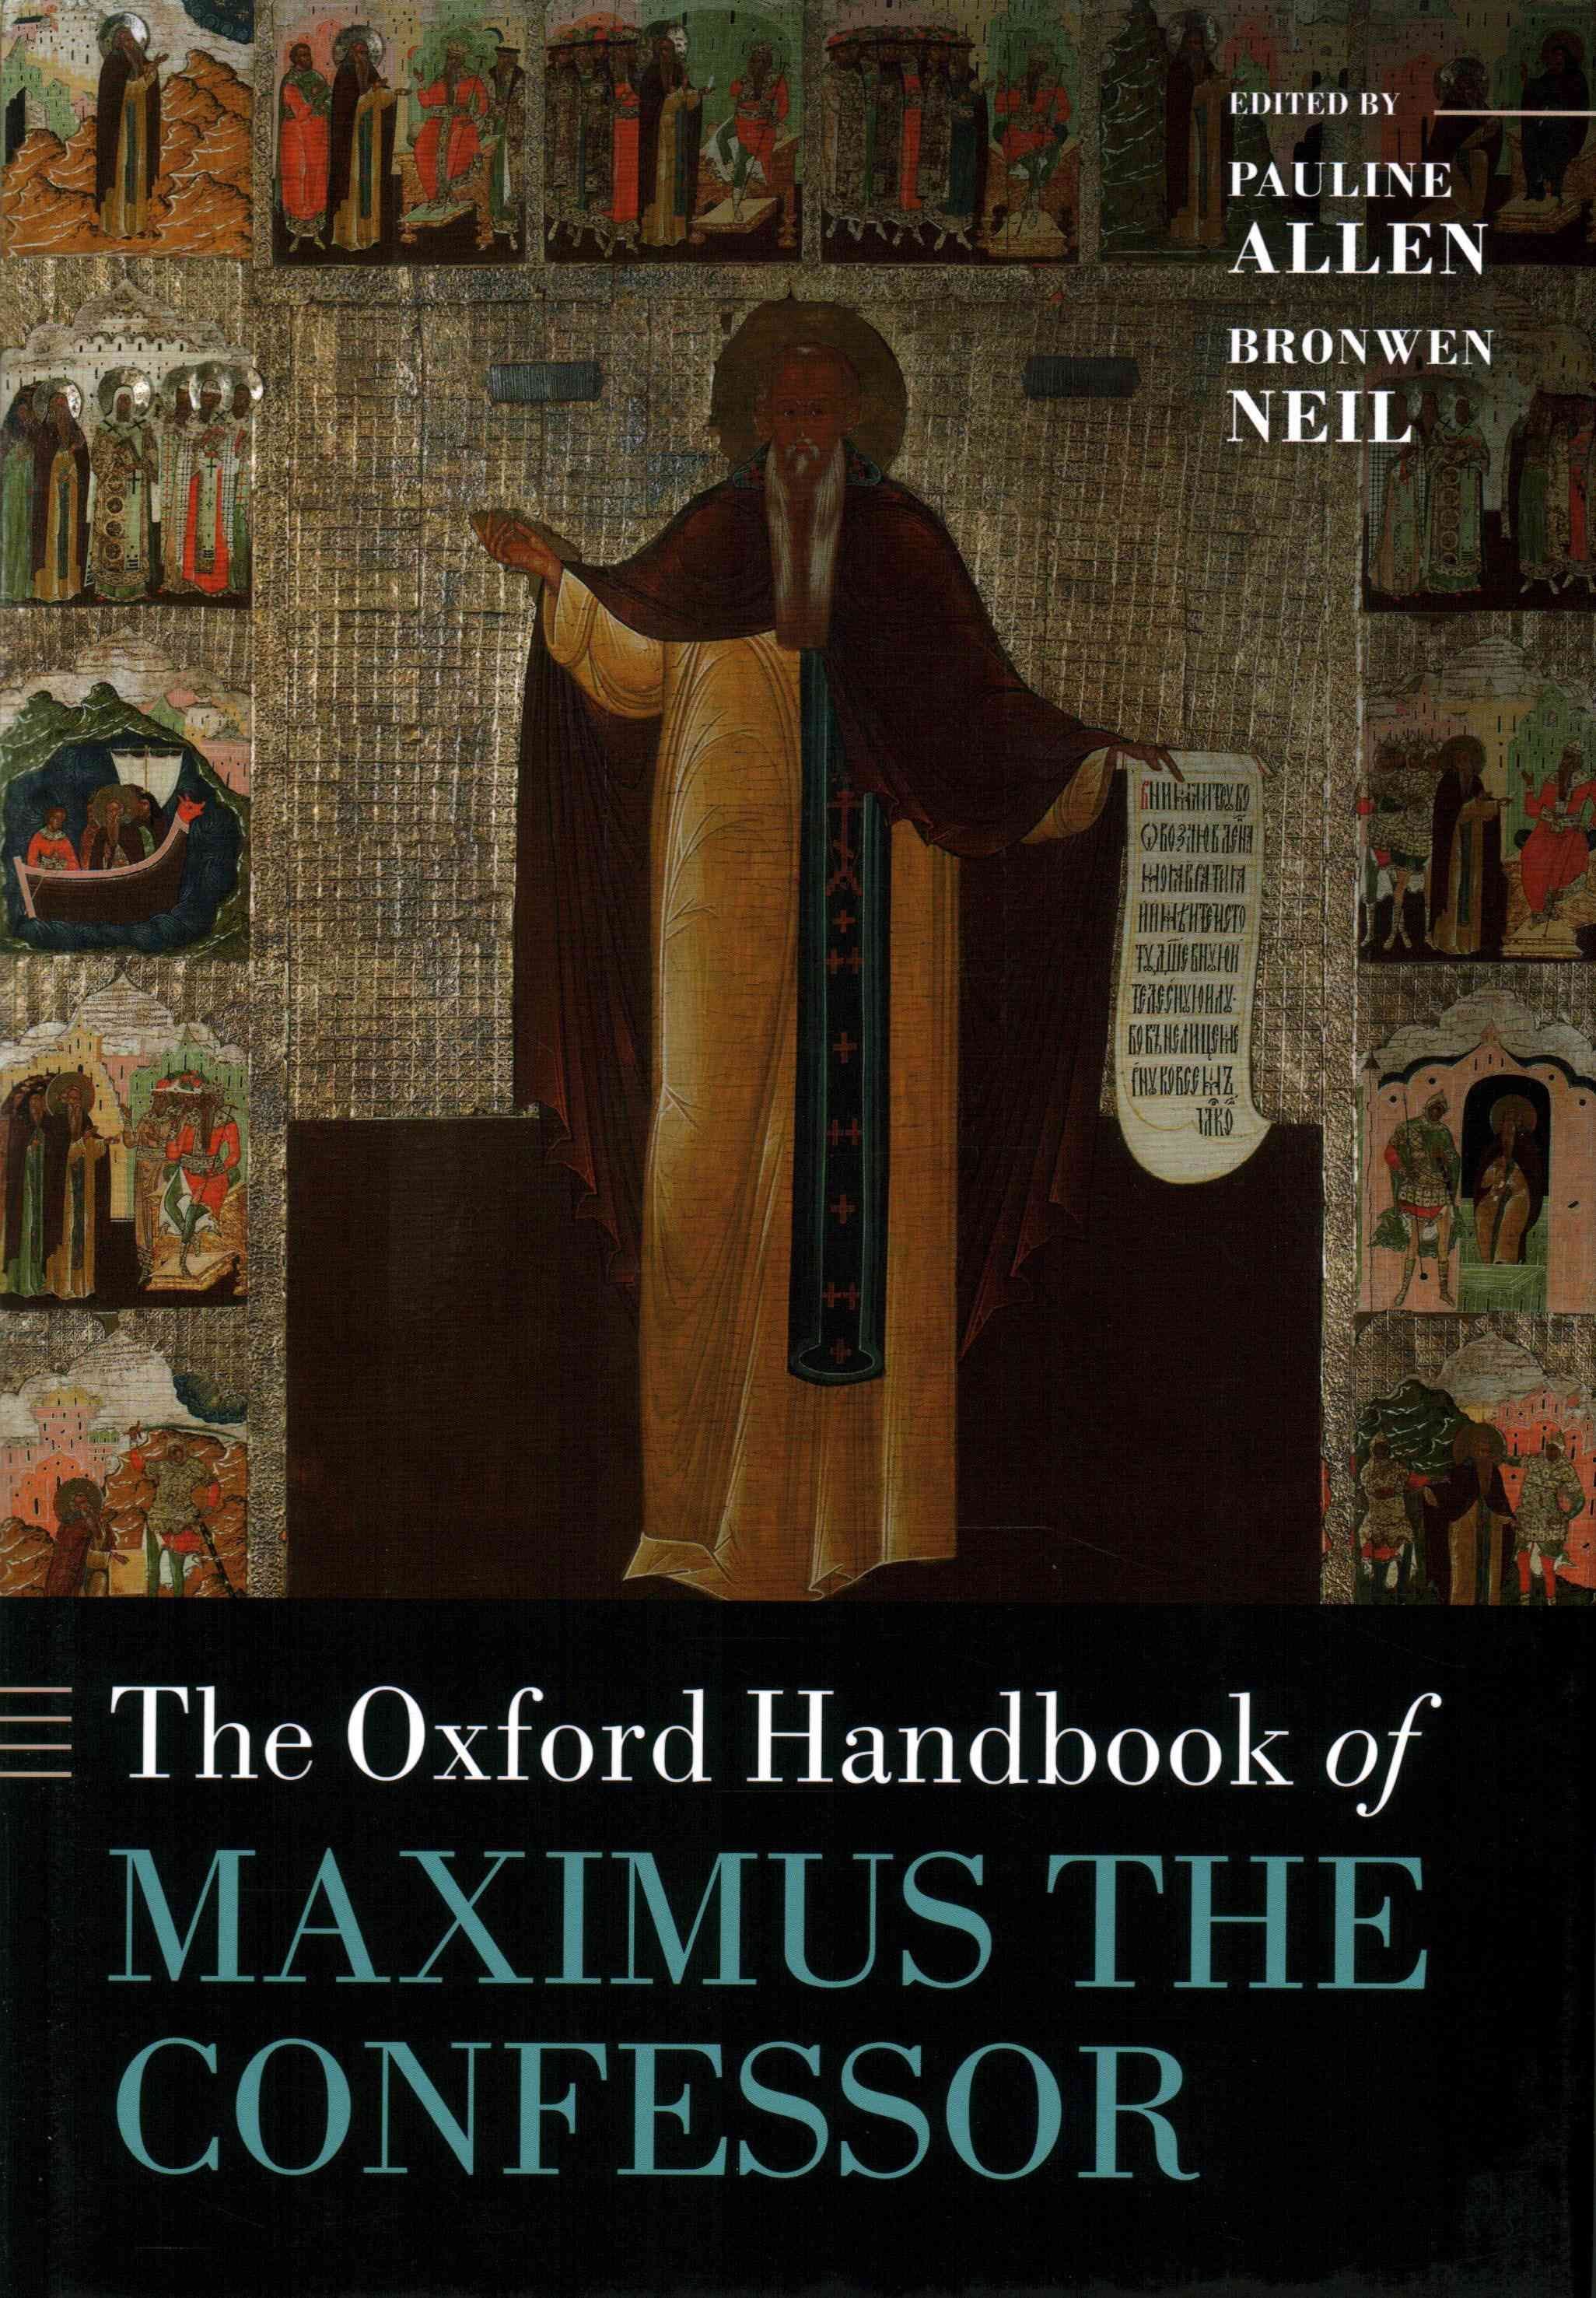 The Oxford Handbook of Maximus the Confessor